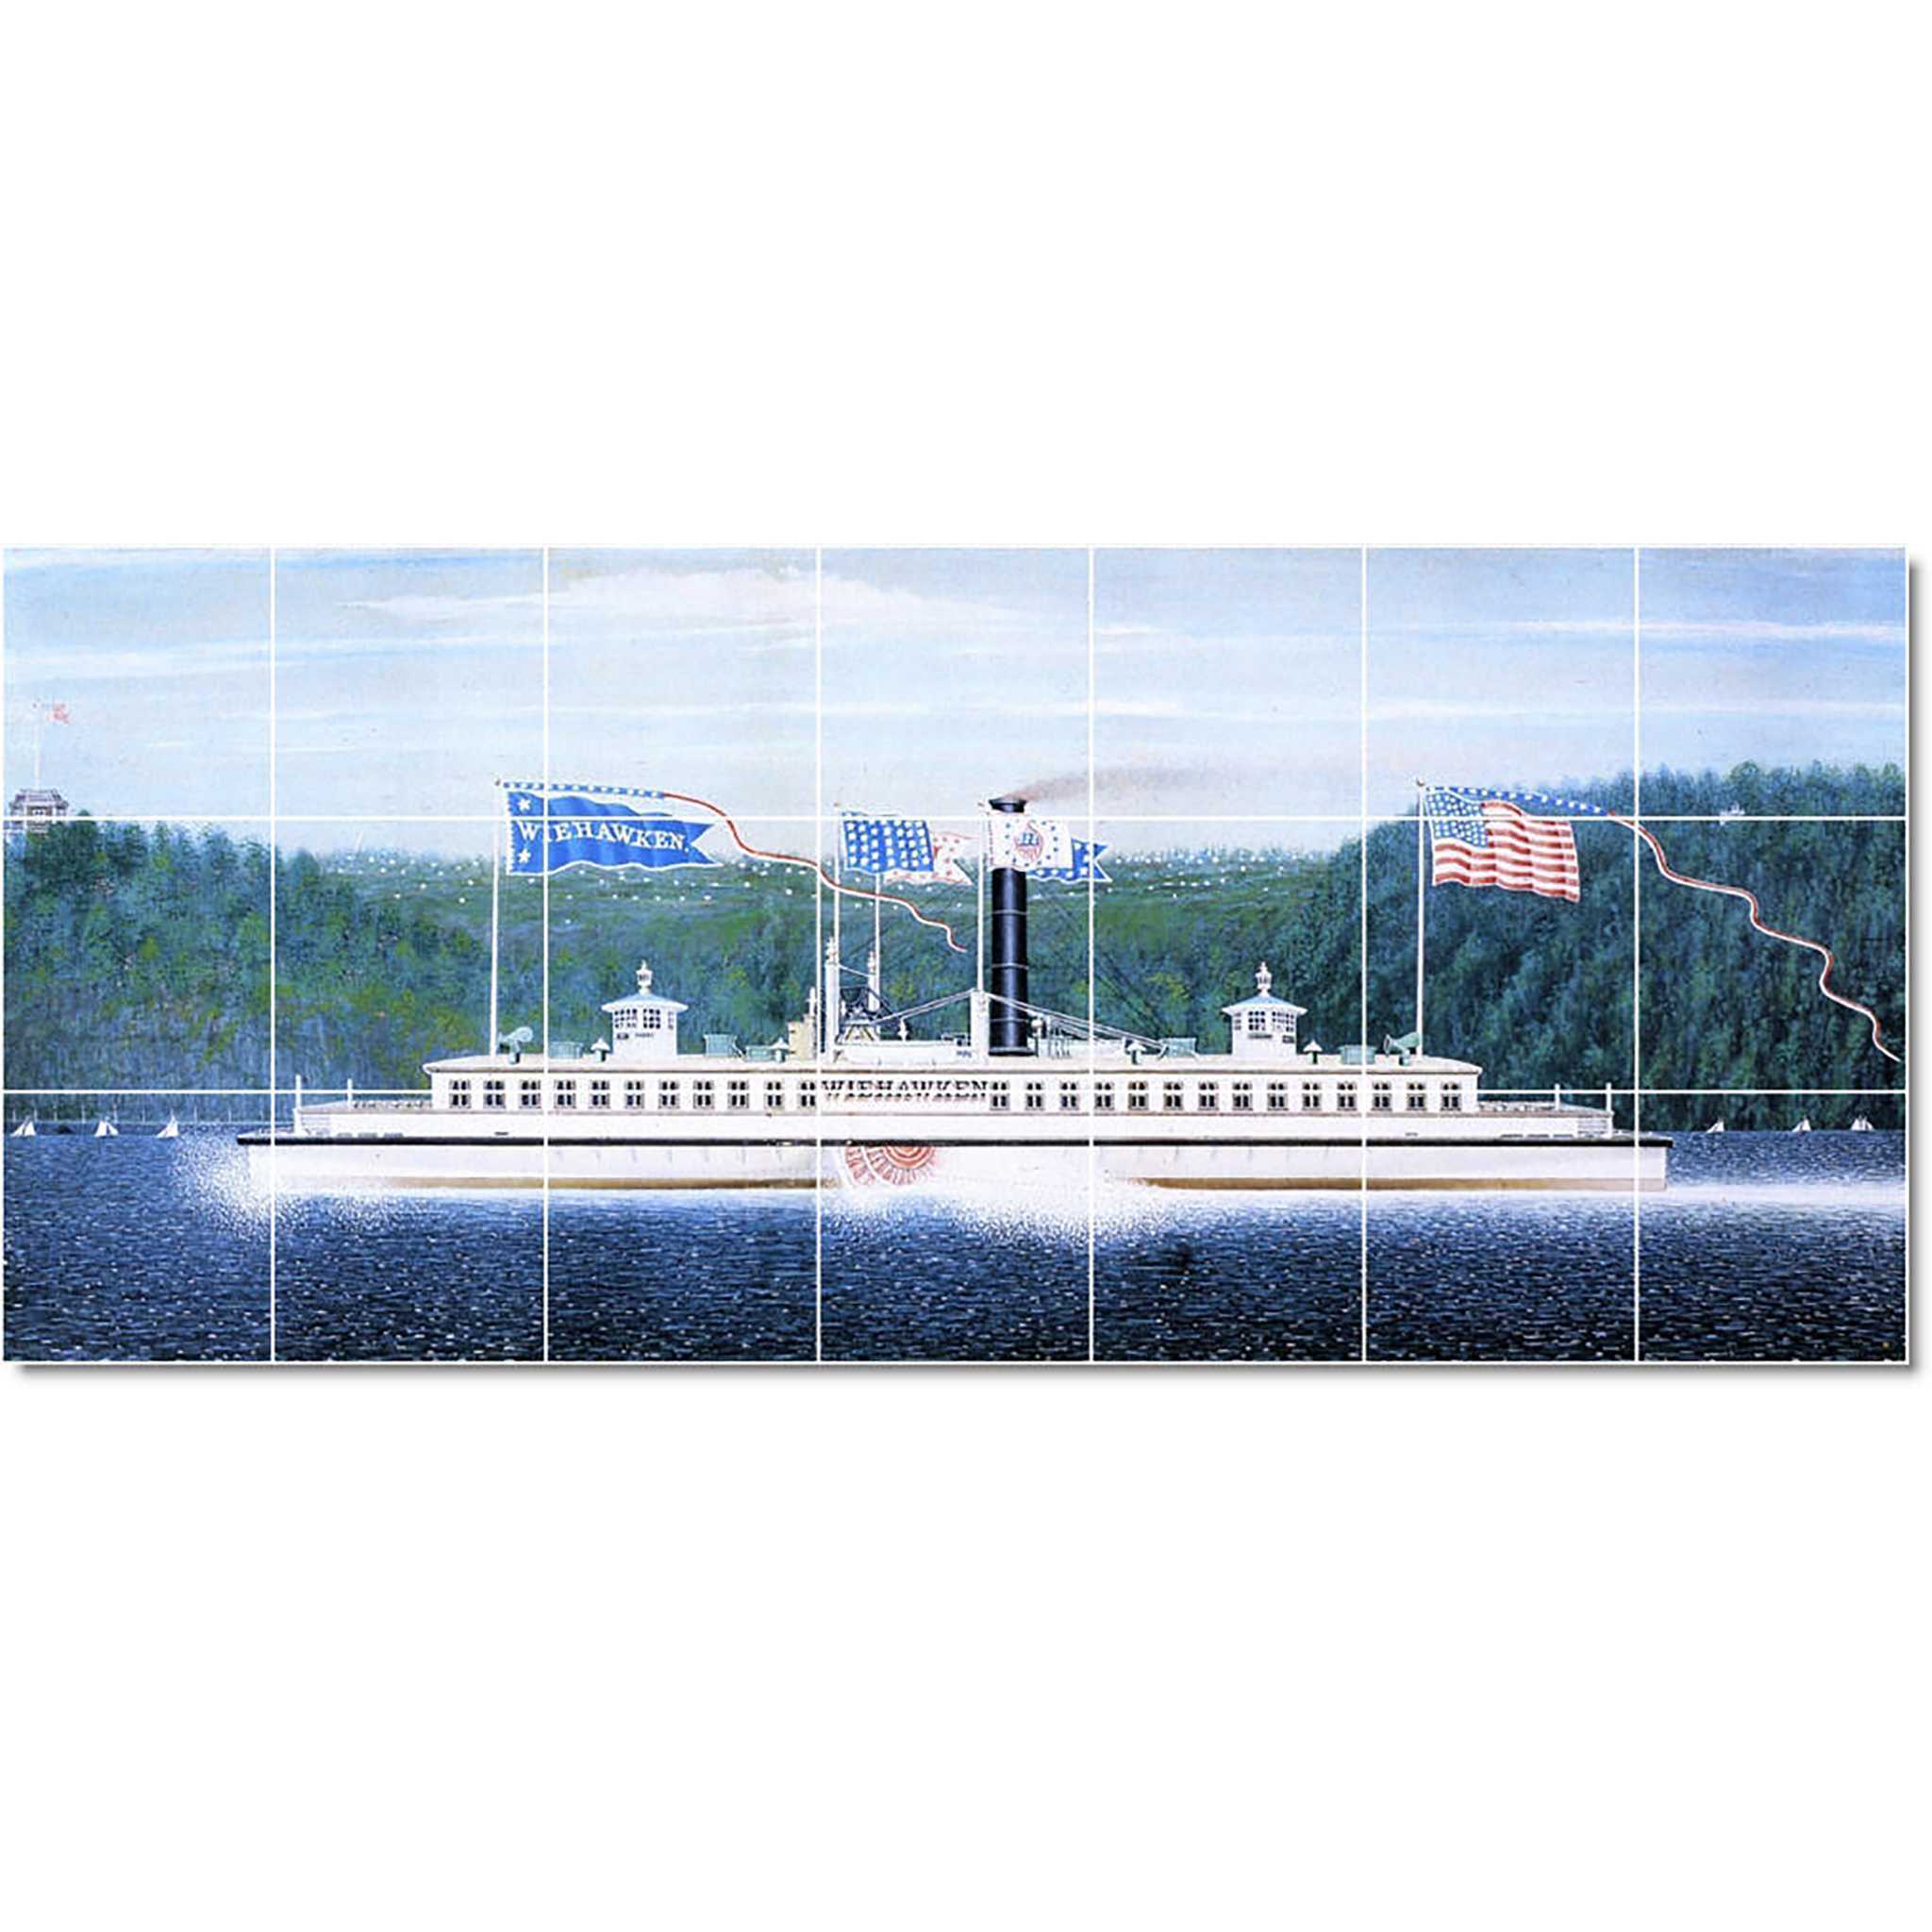 james bard boat ship painting ceramic tile mural p22105